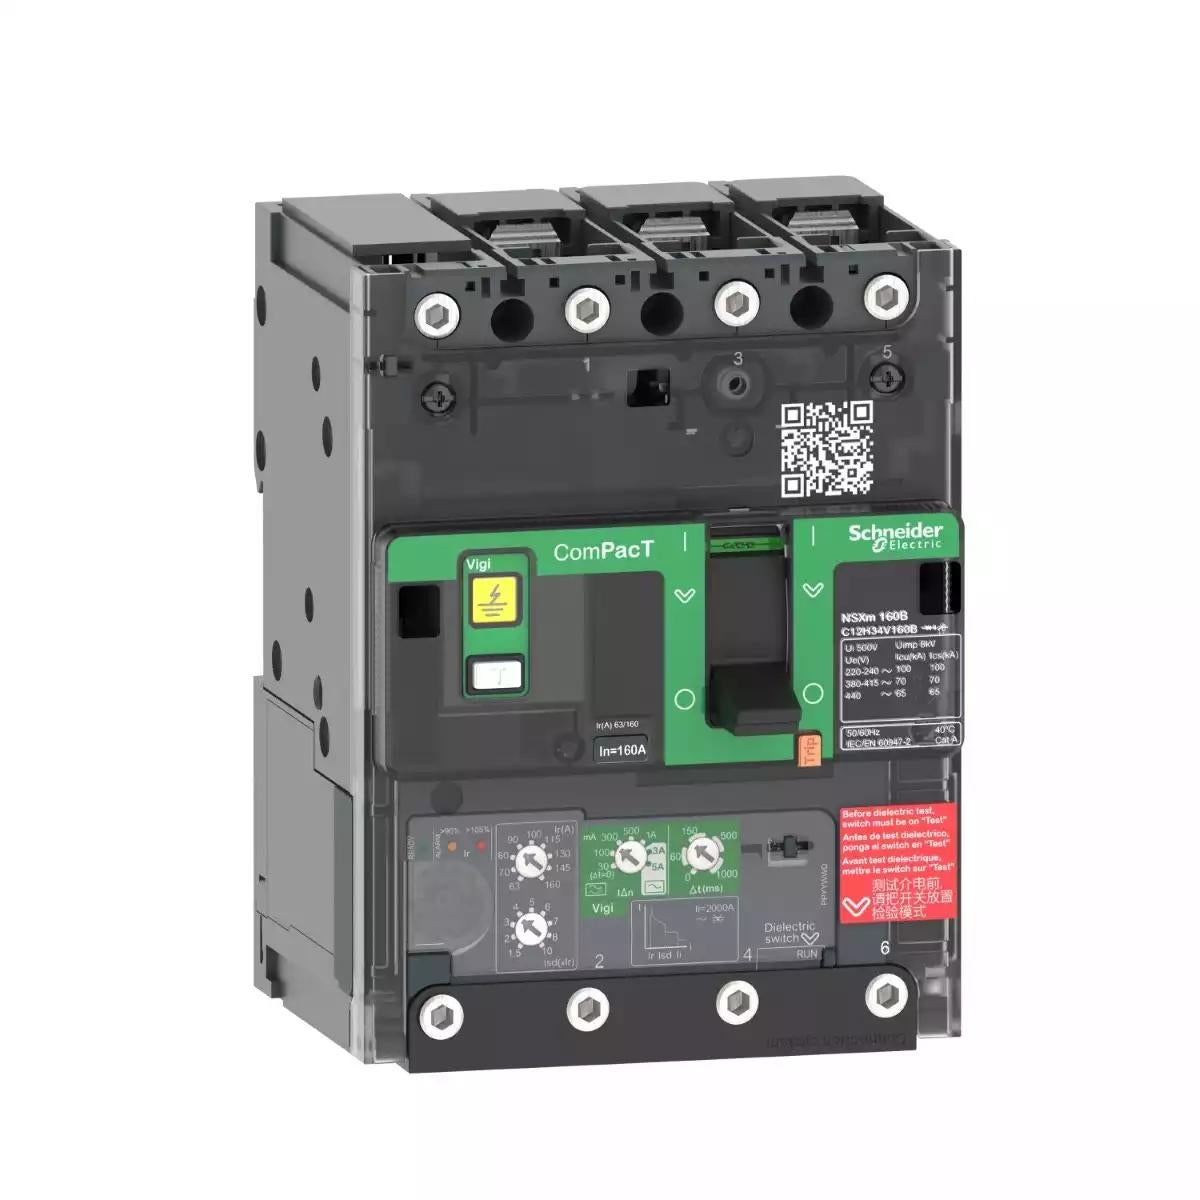 Schneider Electric Circuit breaker ComPacT NSXm H (70kA at 415VAC), 3 Poles 3d, 160A rating Micrologic 4.1 trip unit, lugs and busbar connectors